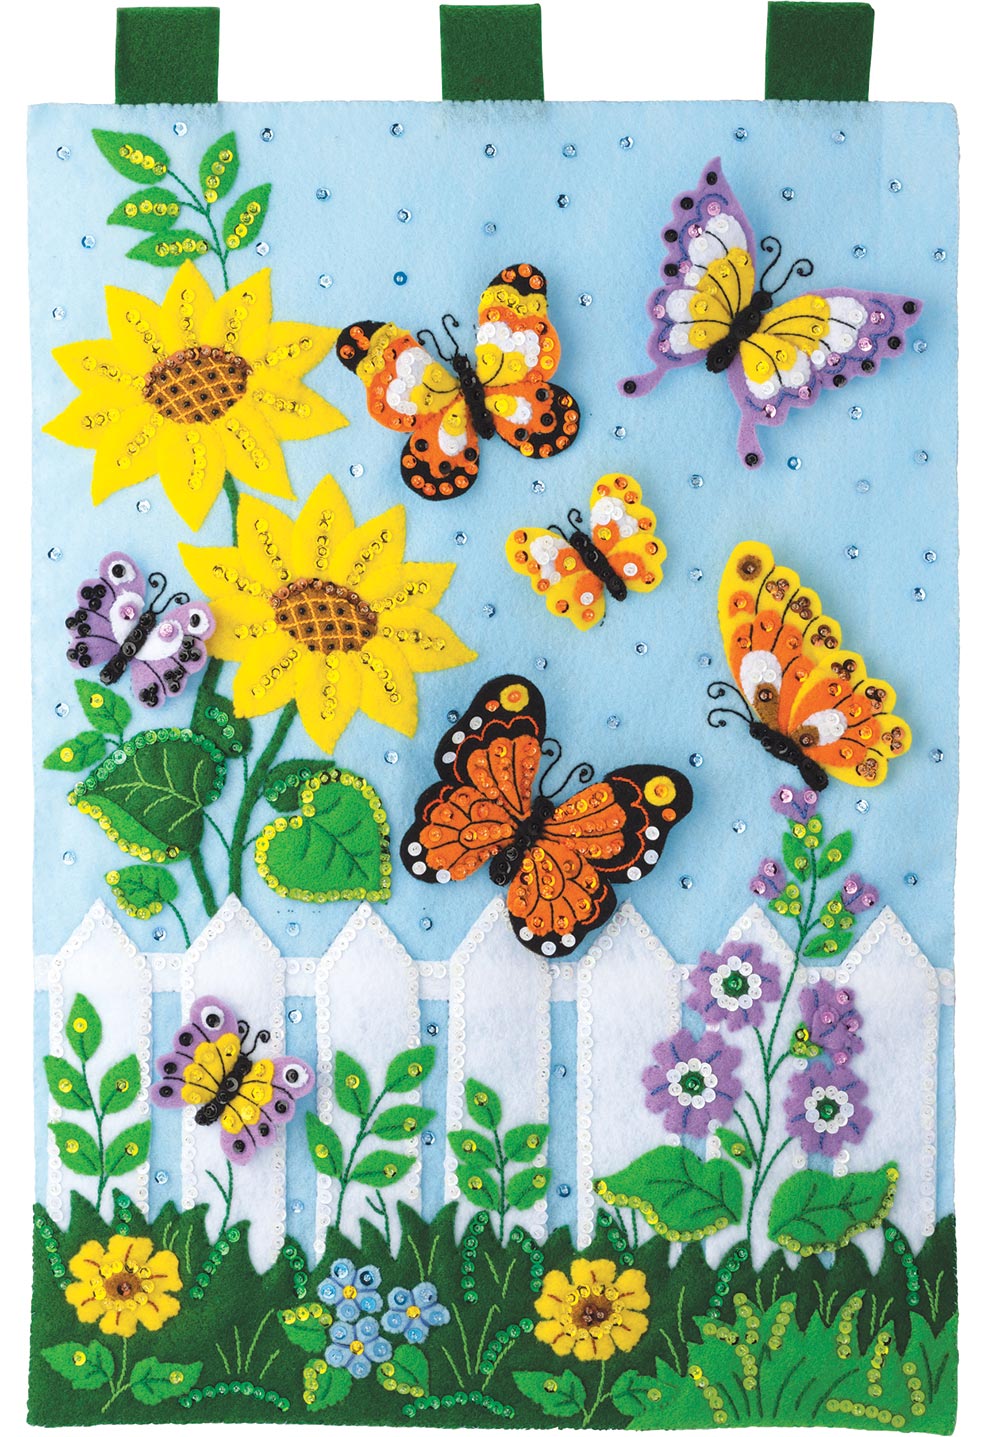 Butterfly Garden Felt Wall Hanging Kit